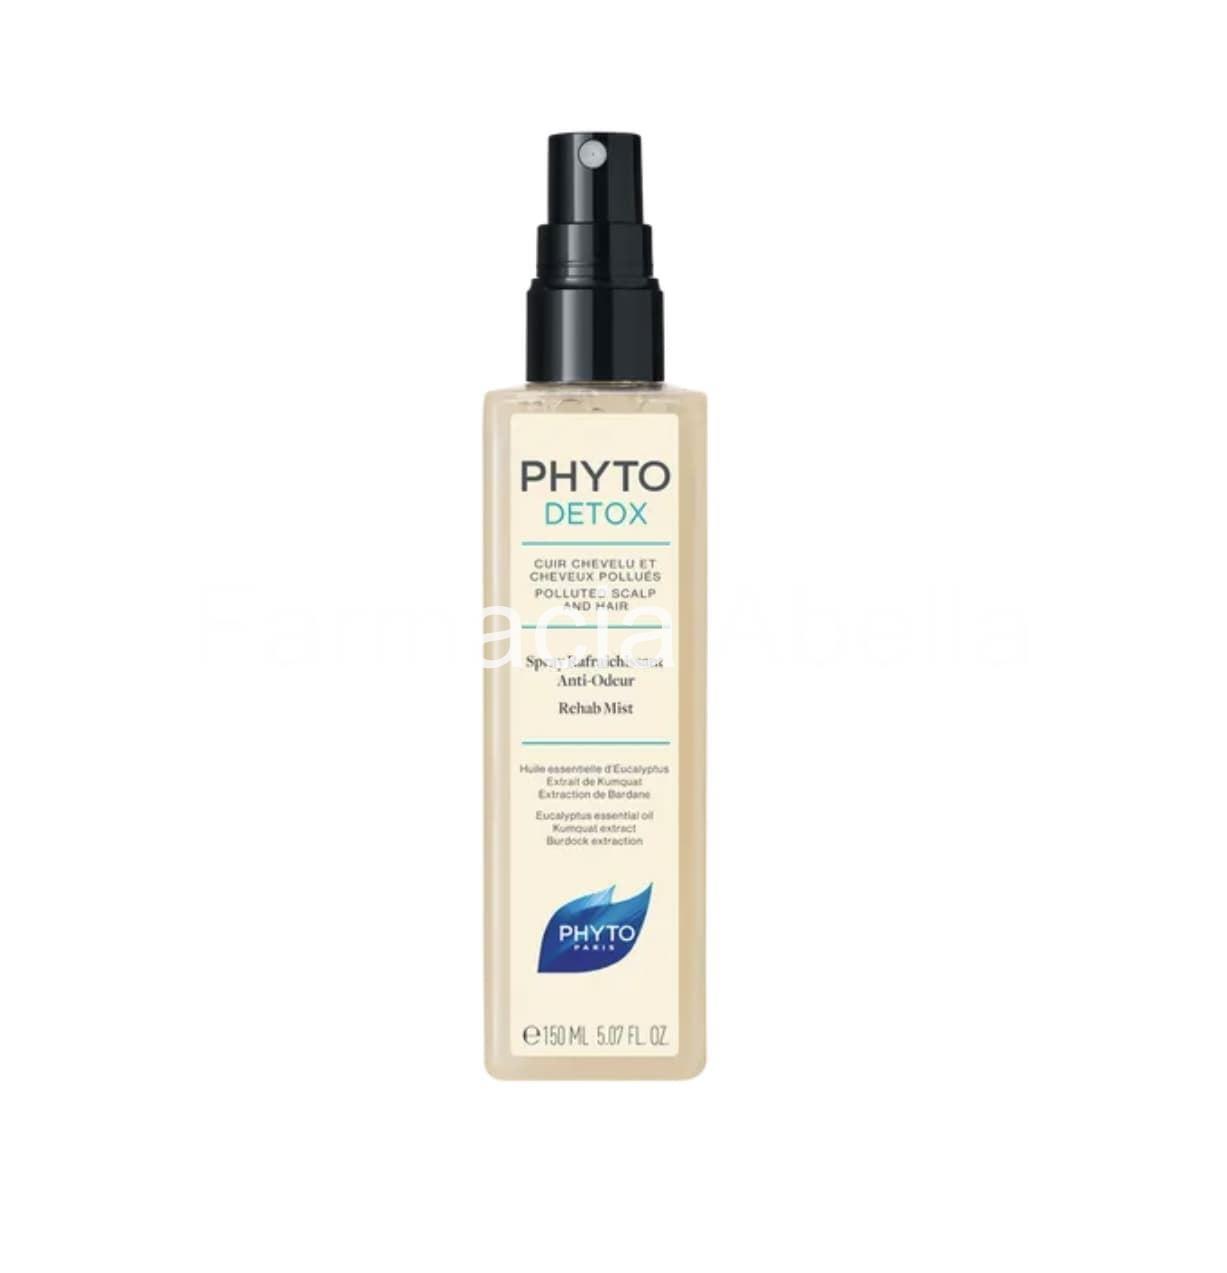 Phytodetox spray refrescante anti olor 150 ml - Imagen 1